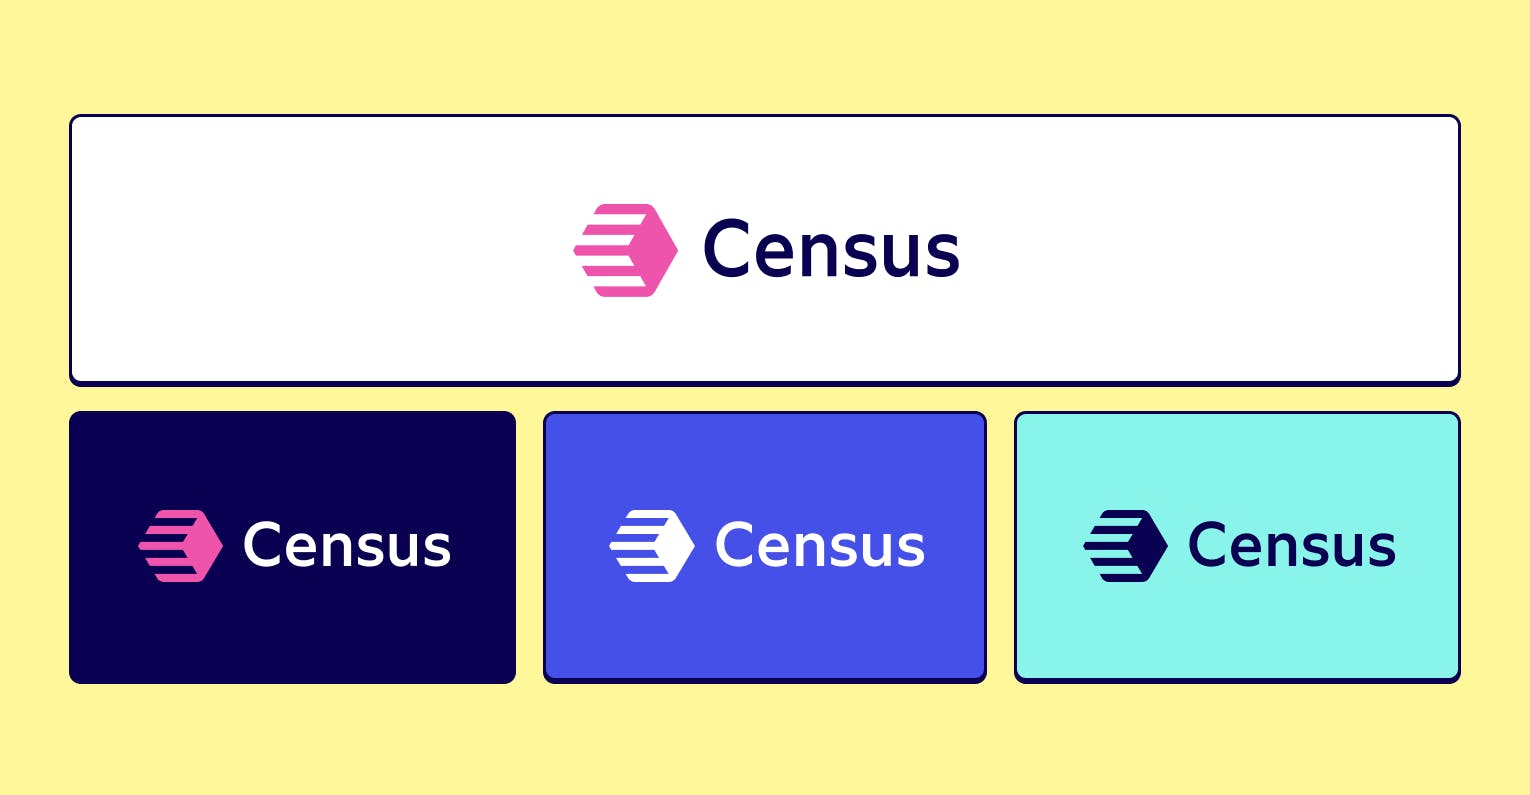 Census' new logo